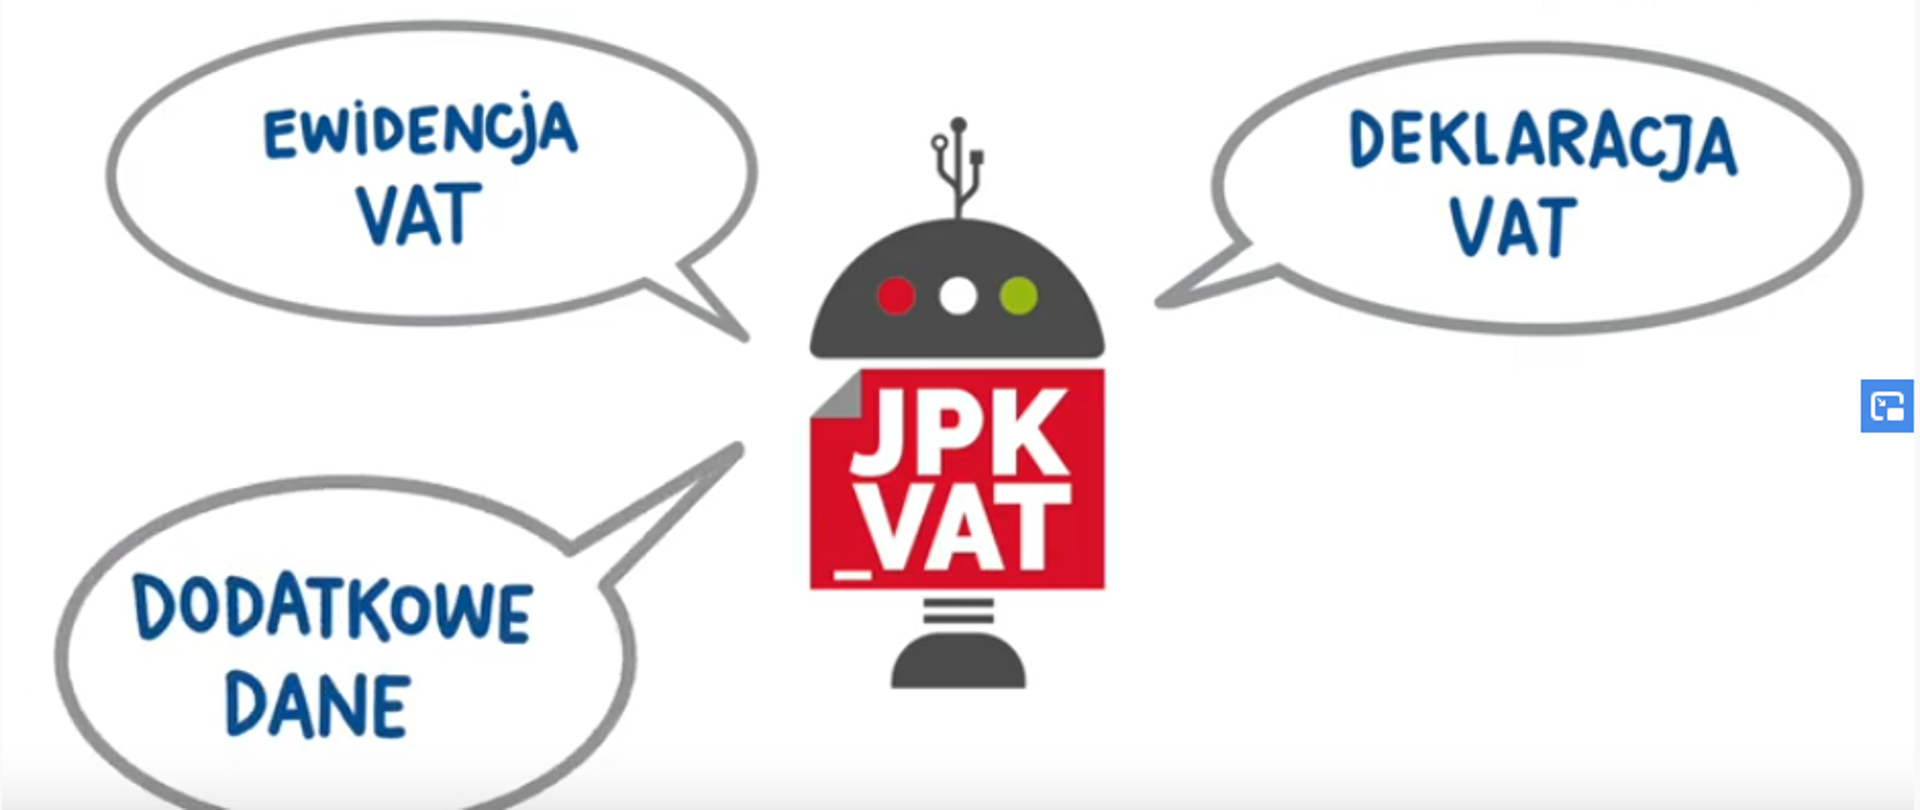 Robot JPK_VAT z chmurkami z napisami: ewidencja VAT, deklaracja VAT, dodatkowe dane.